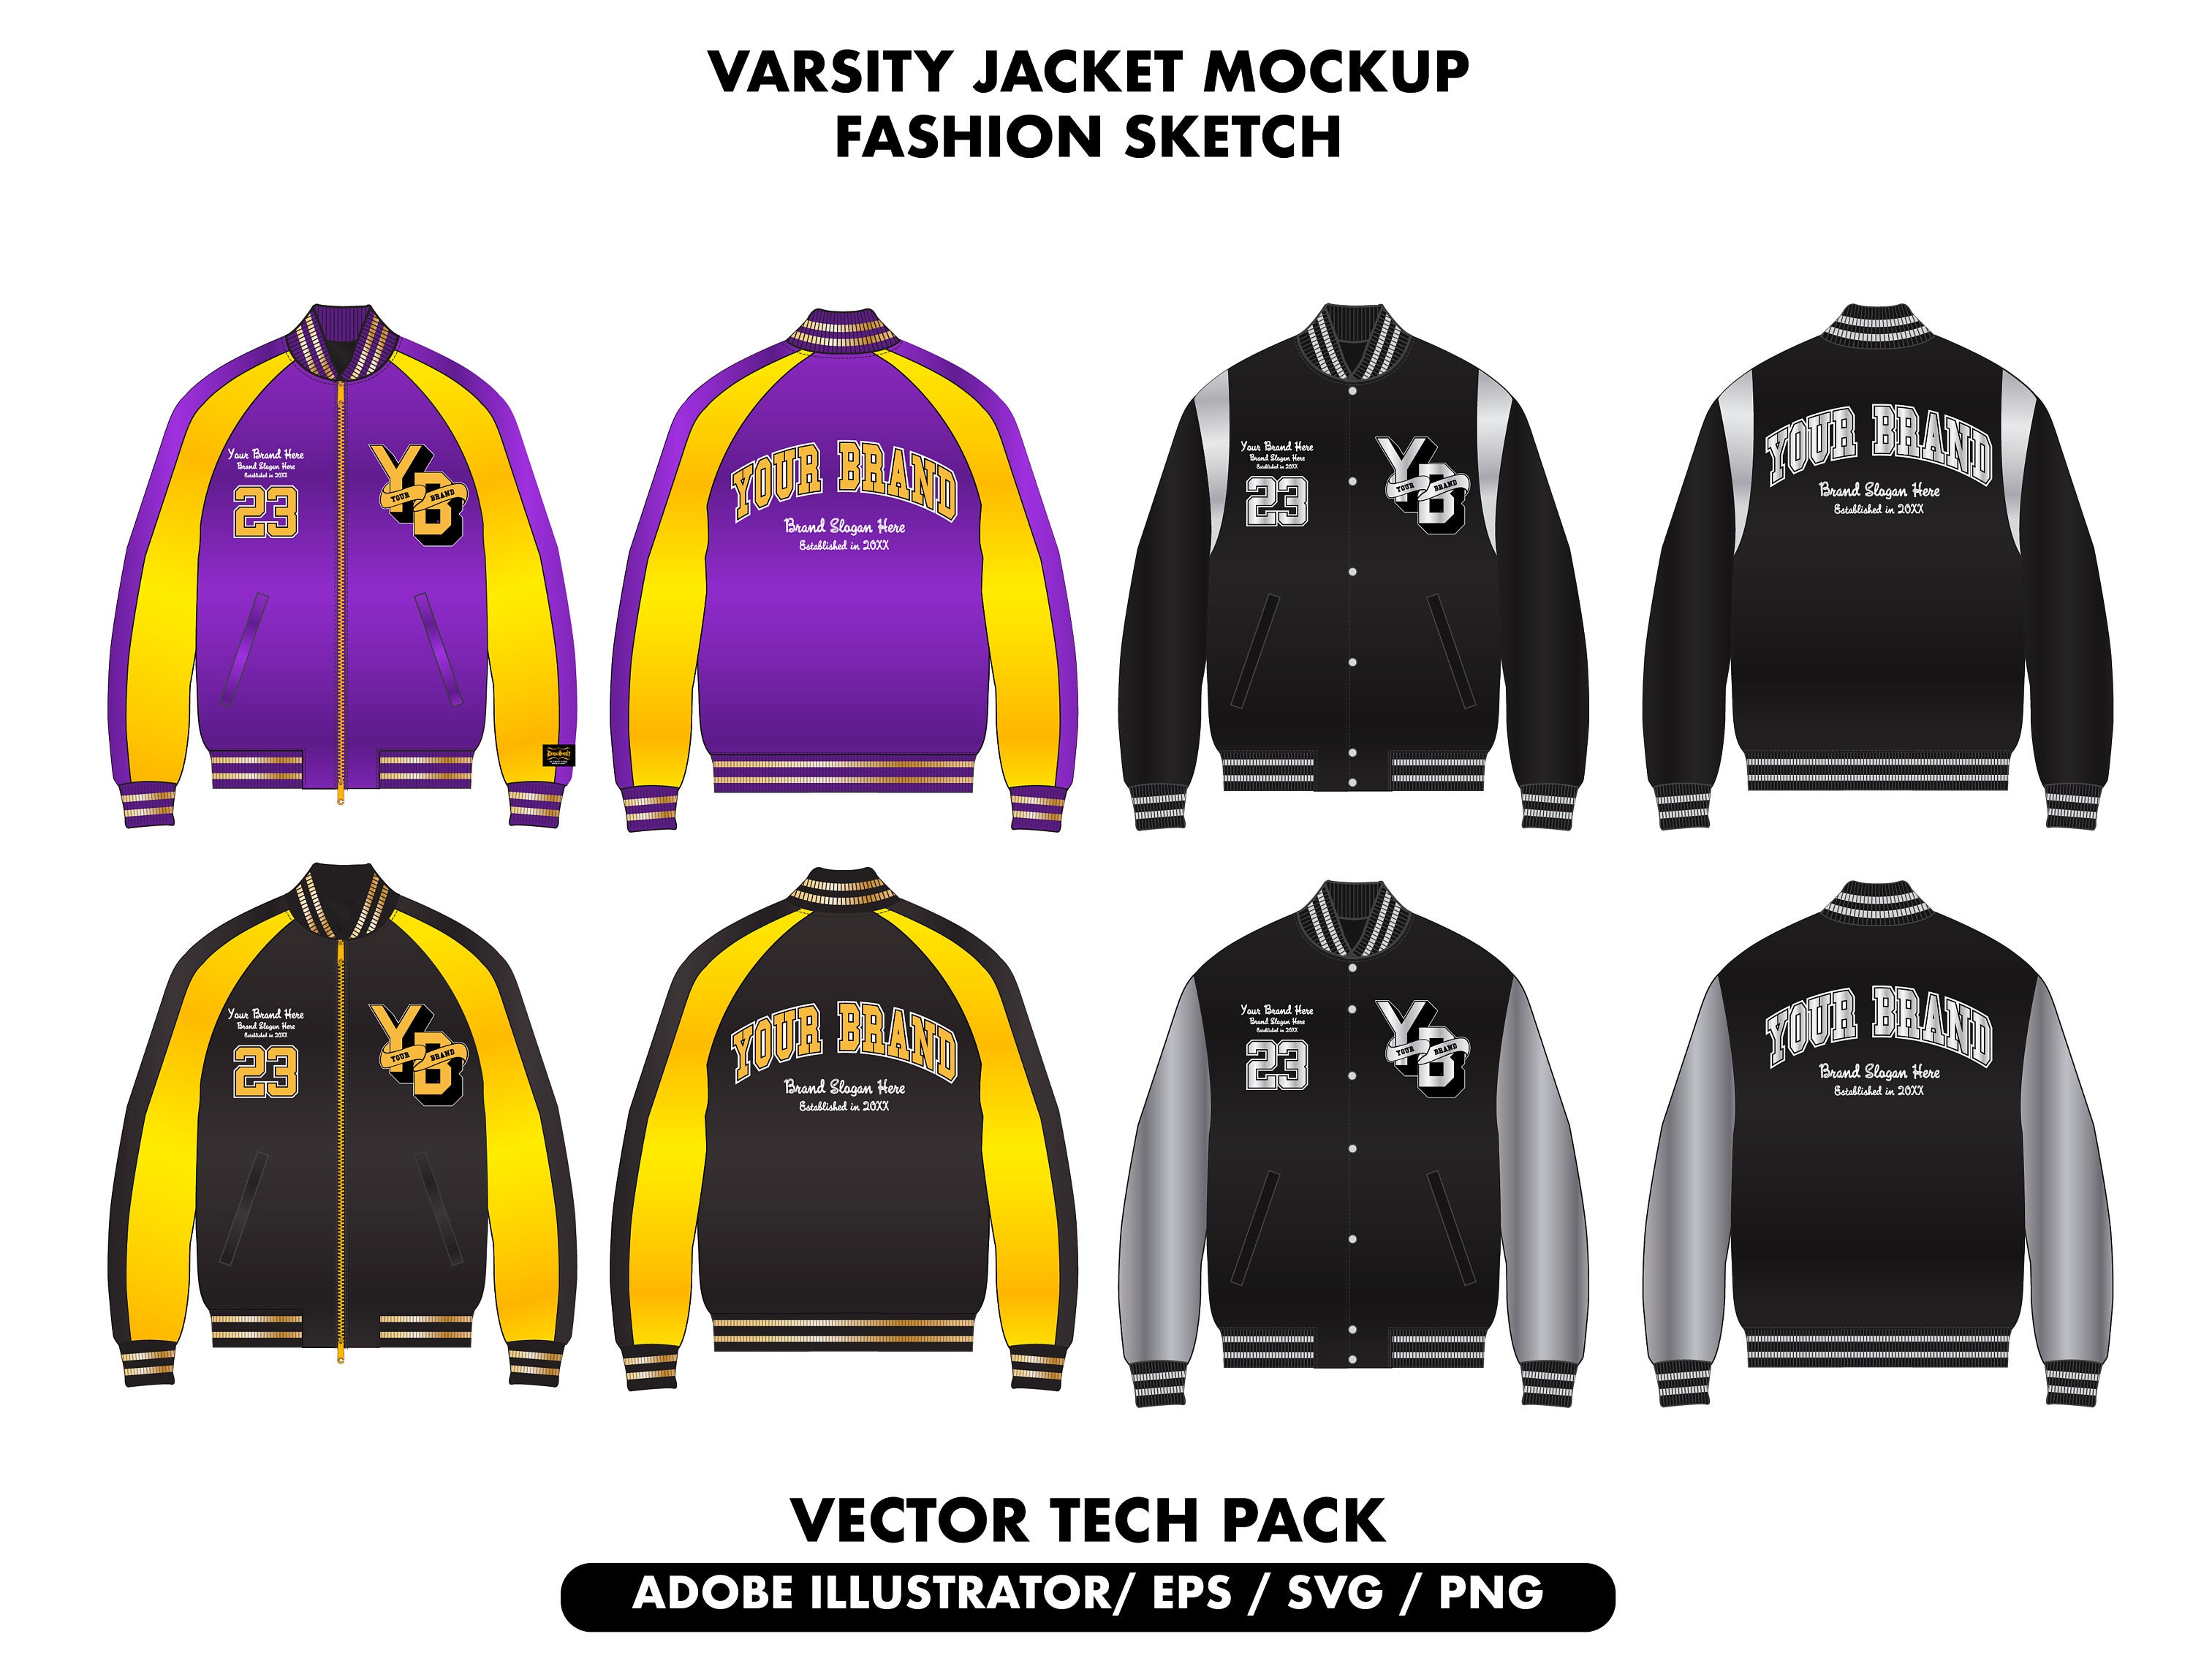 Basketball jersey - Basketball jersey and varsity jacket